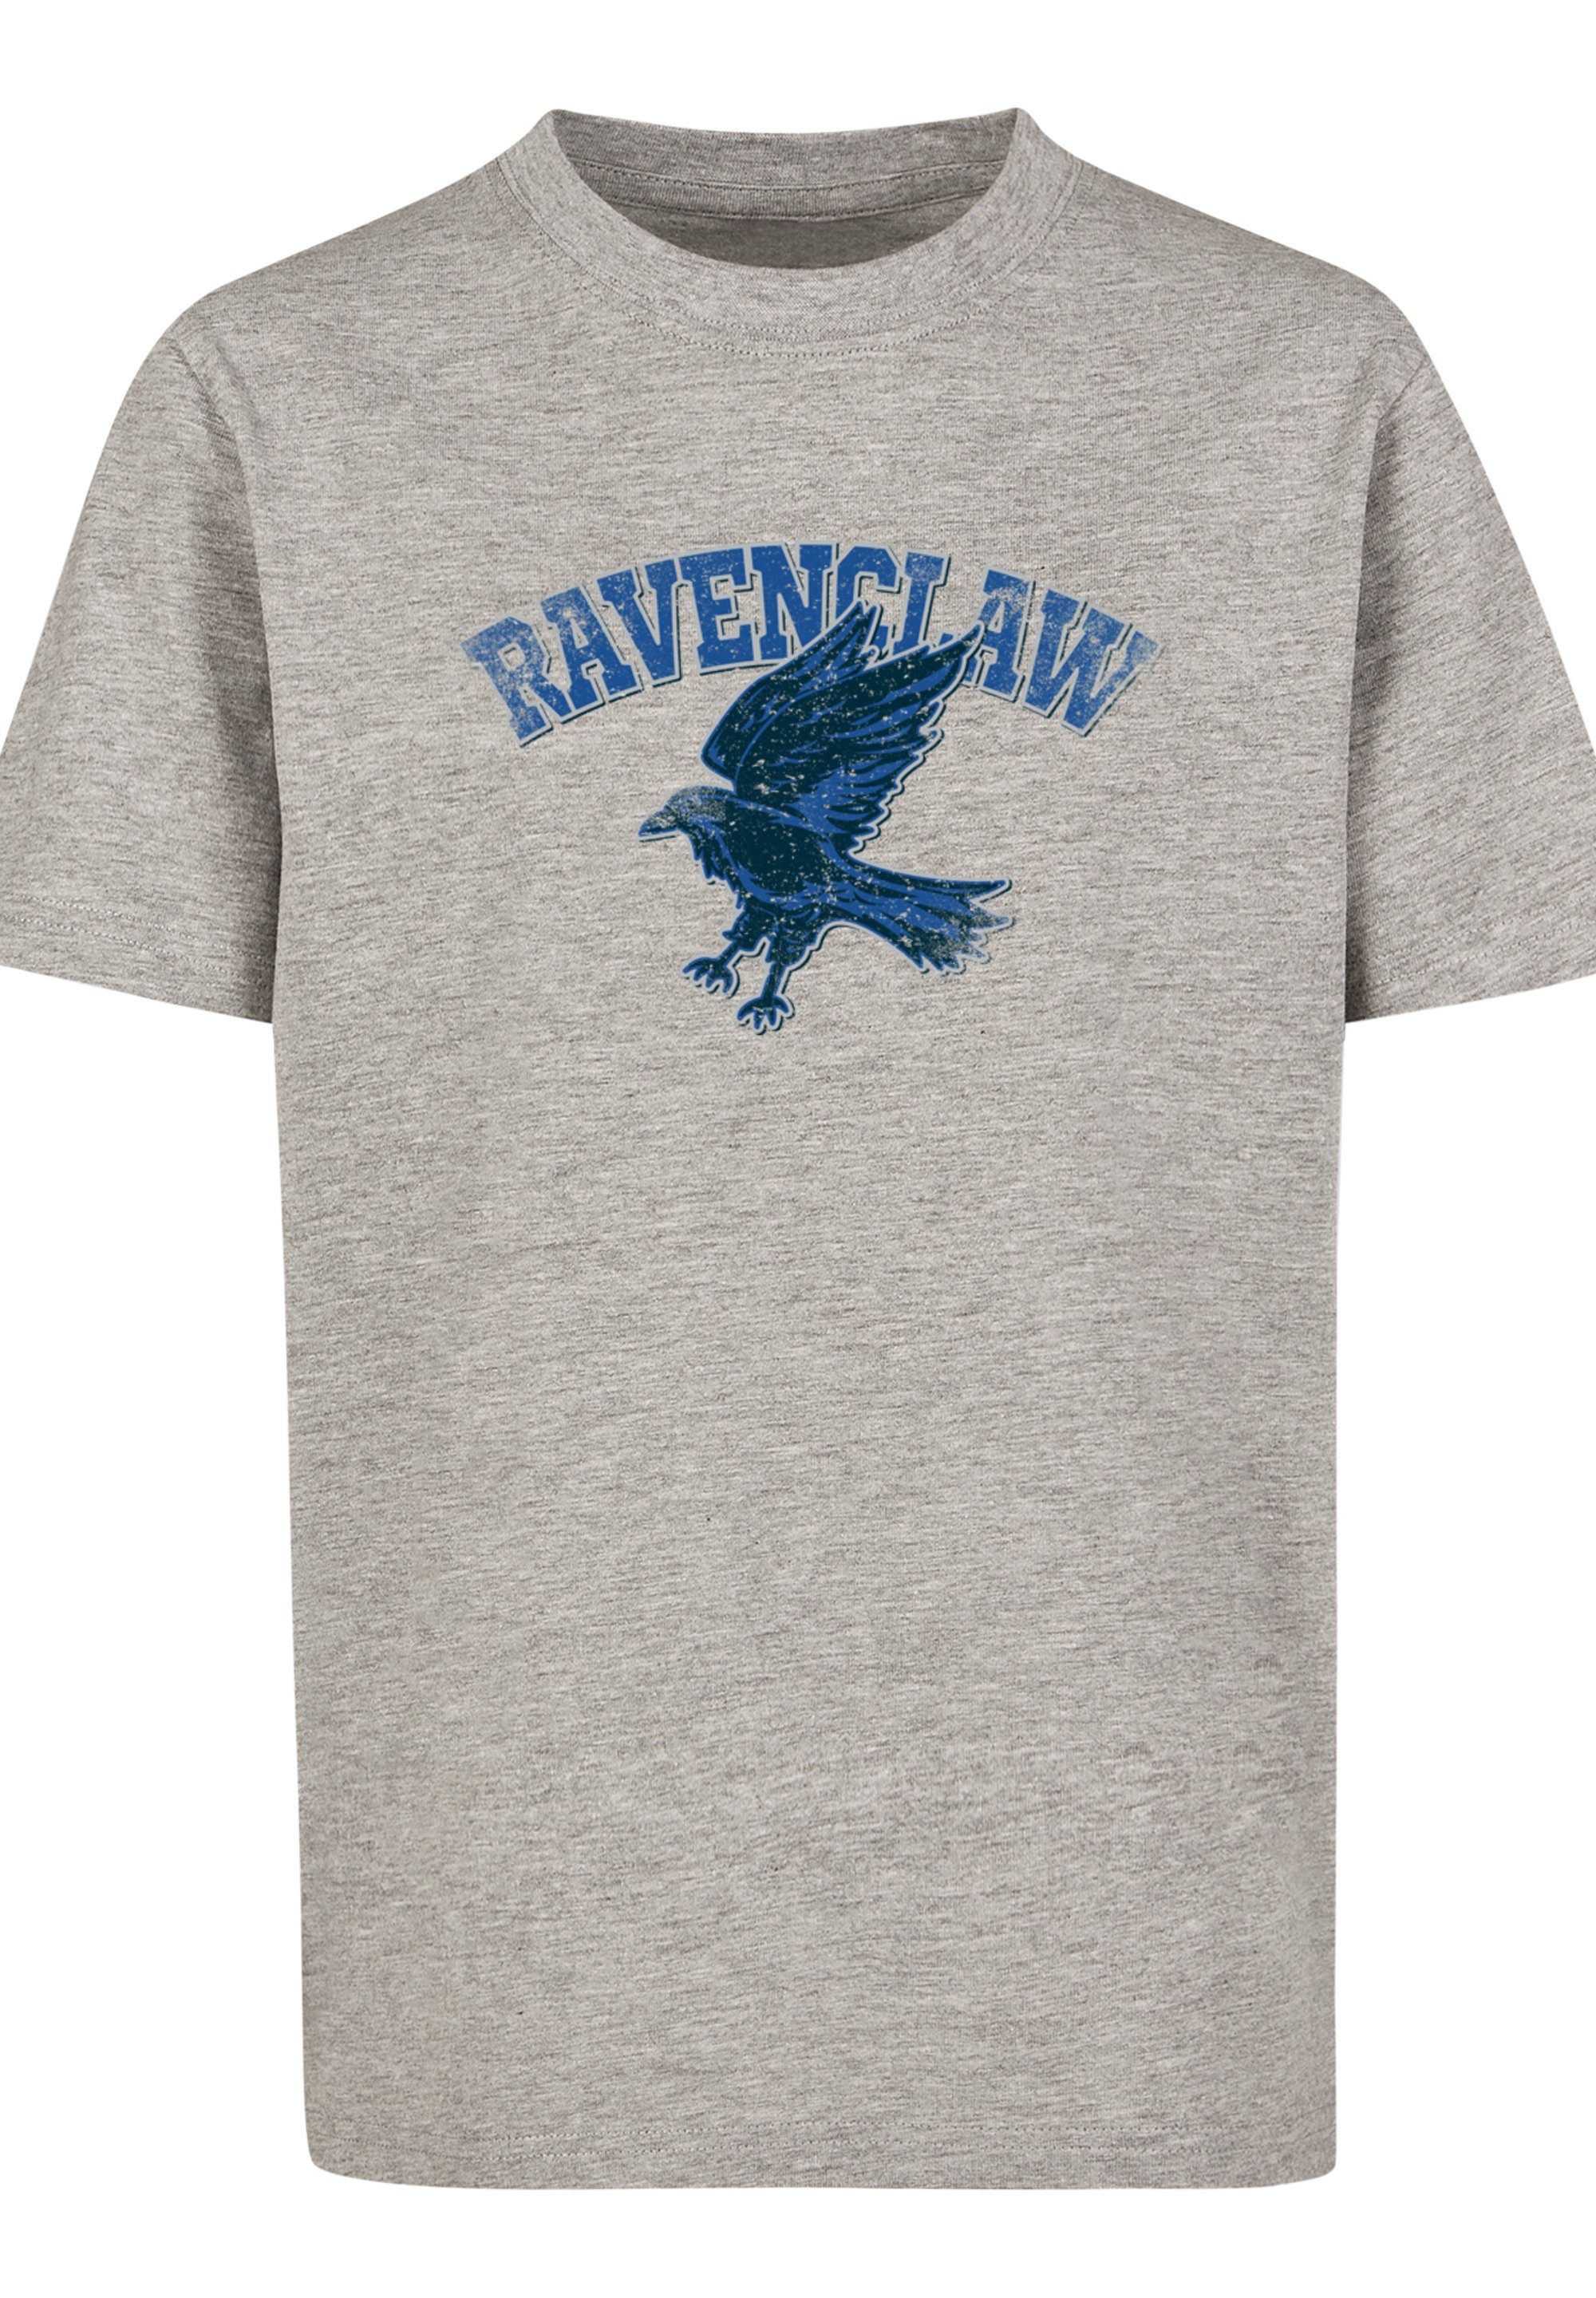 F4NT4STIC T-Shirt Harry Potter grey Sport Print Emblem Ravenclaw heather